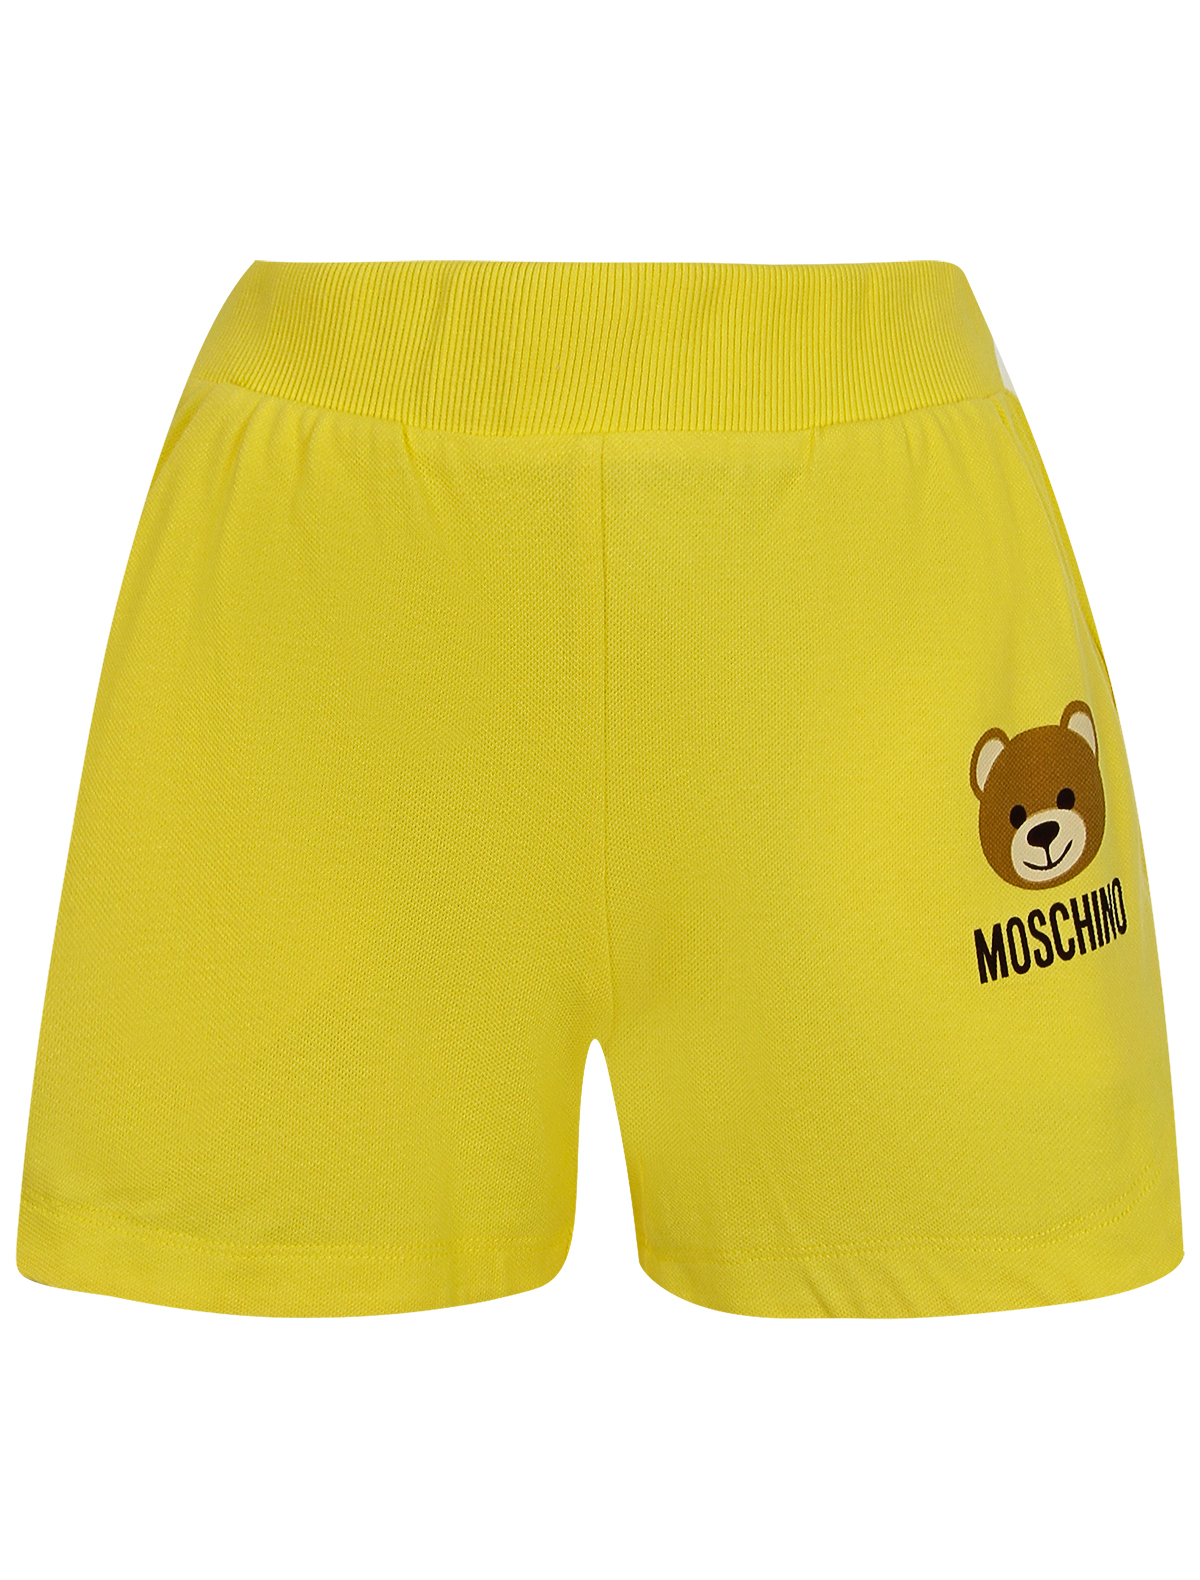 шорты moschino для девочки, желтые